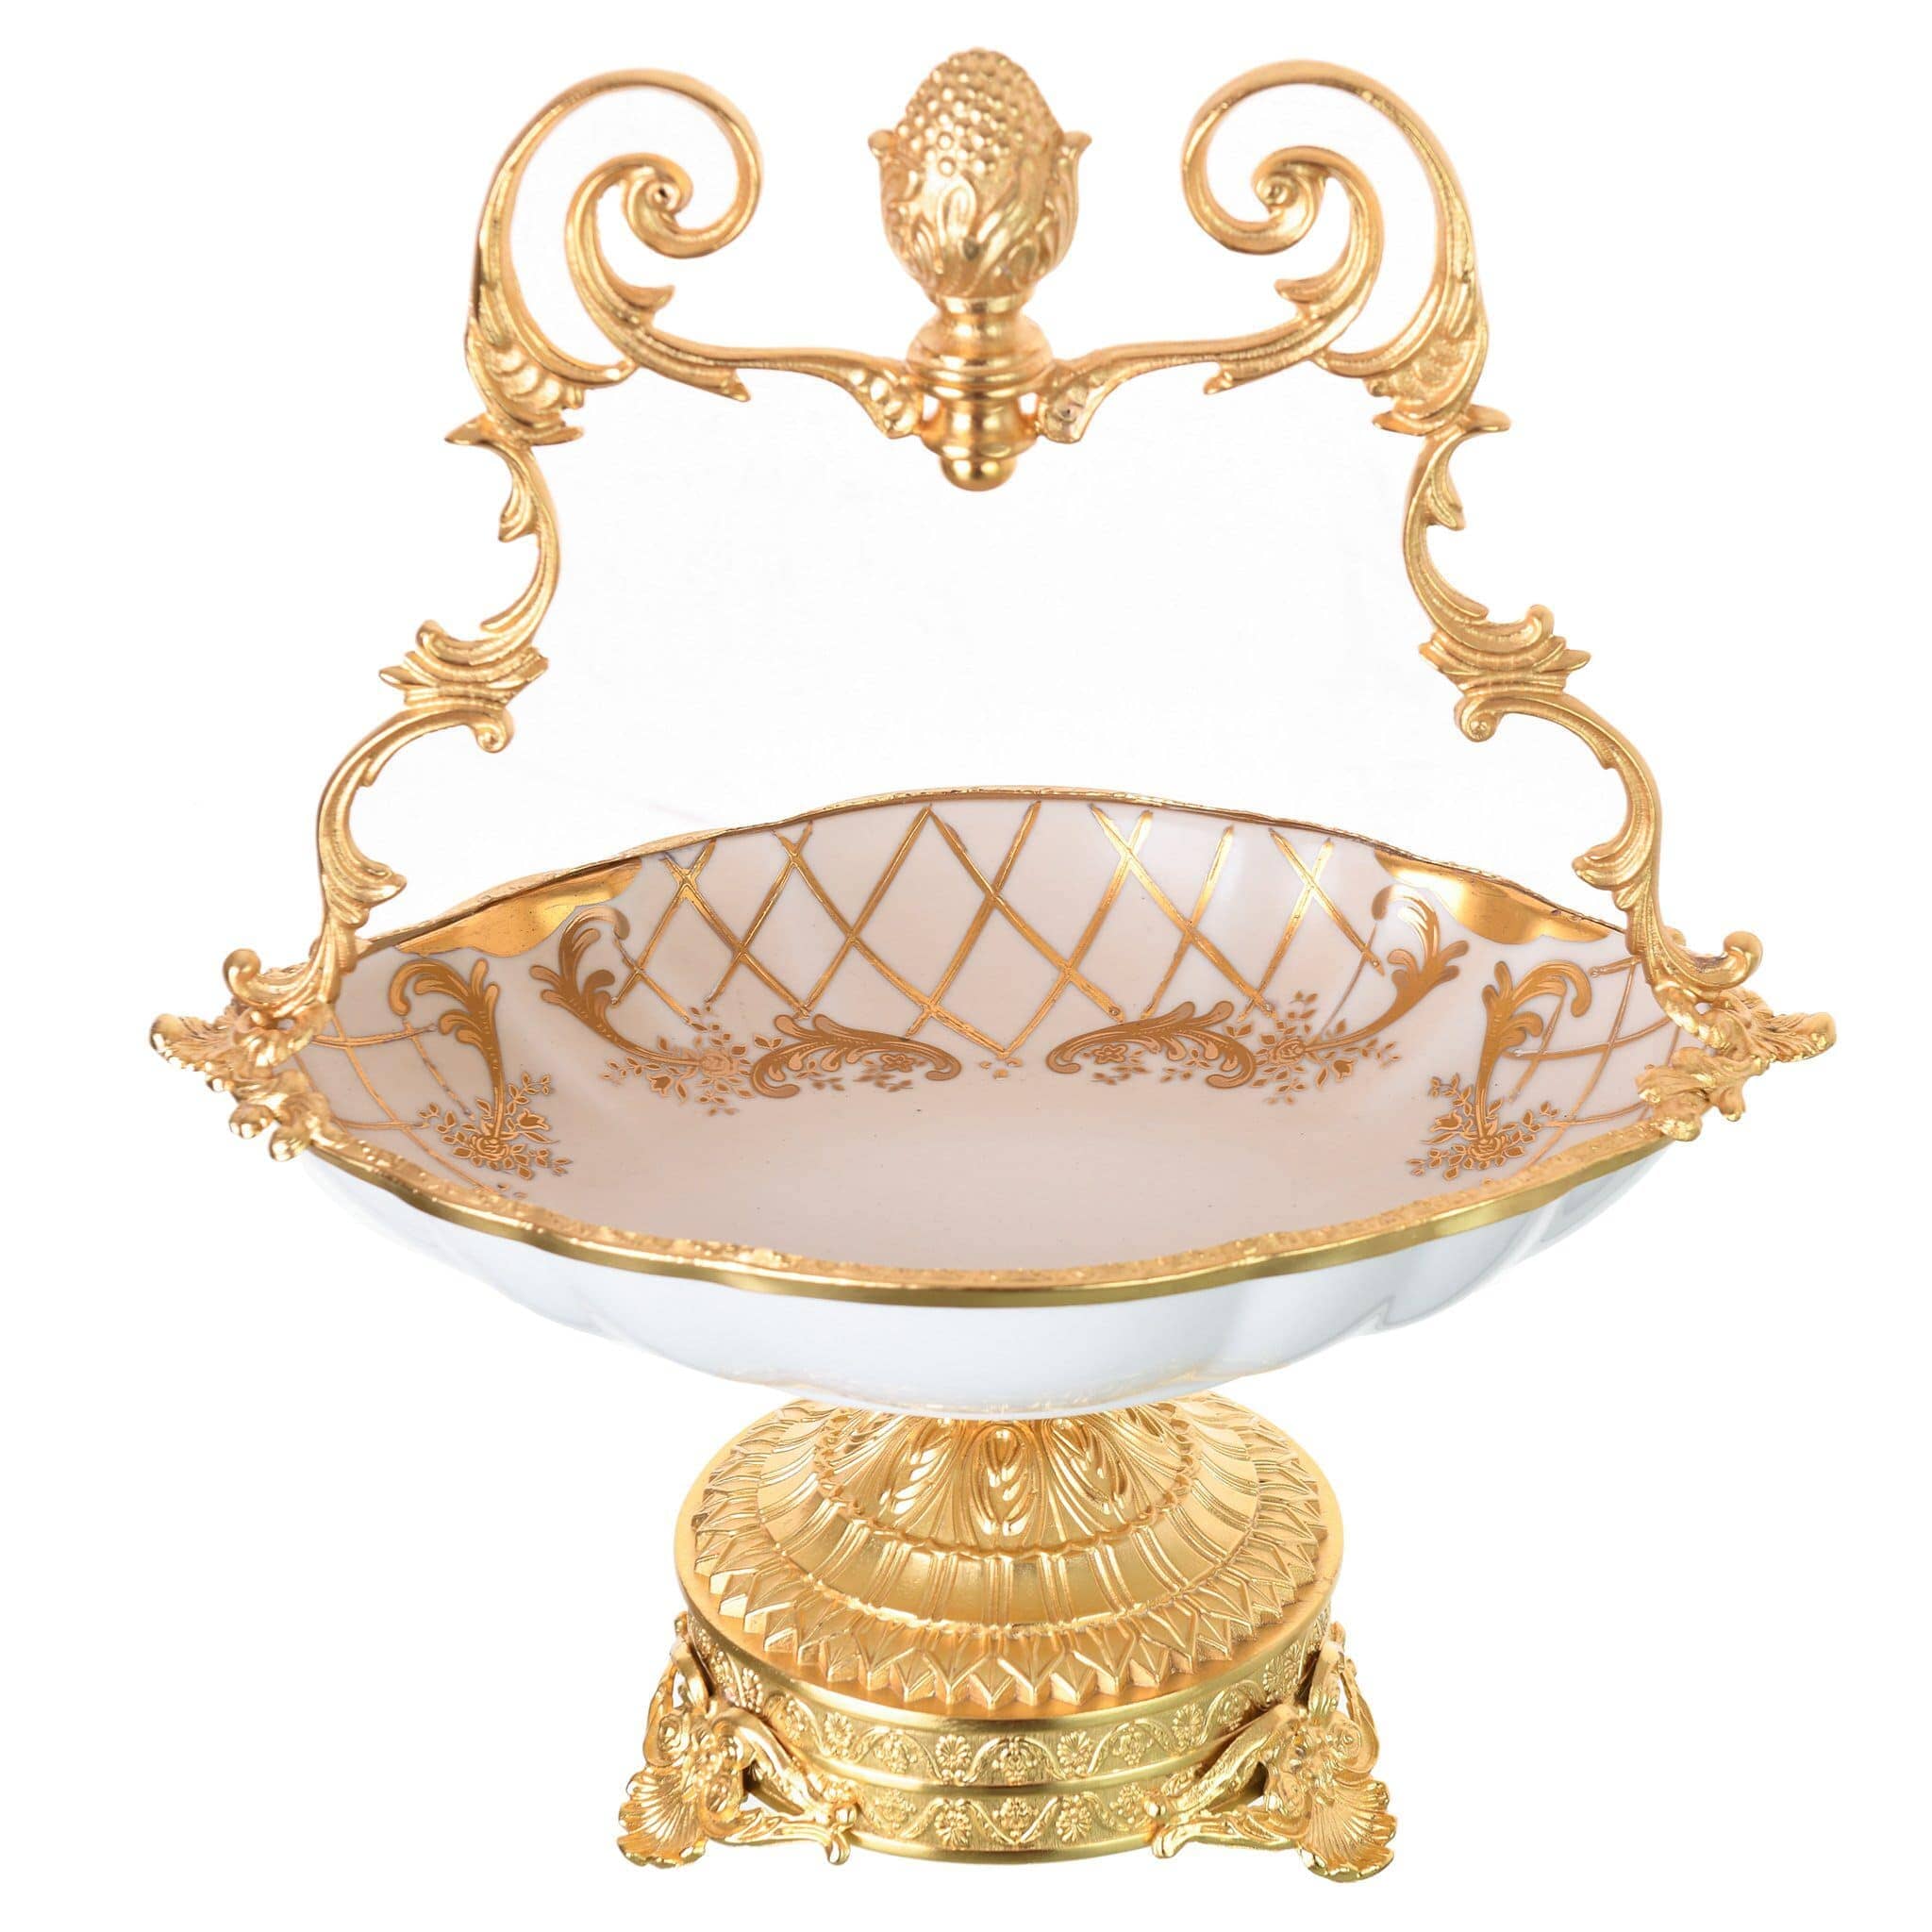 Caroline - Imperial Ova Basket with Gold Plated Base & Handles - Beige & Gold - 30x18x36cm - 58000588